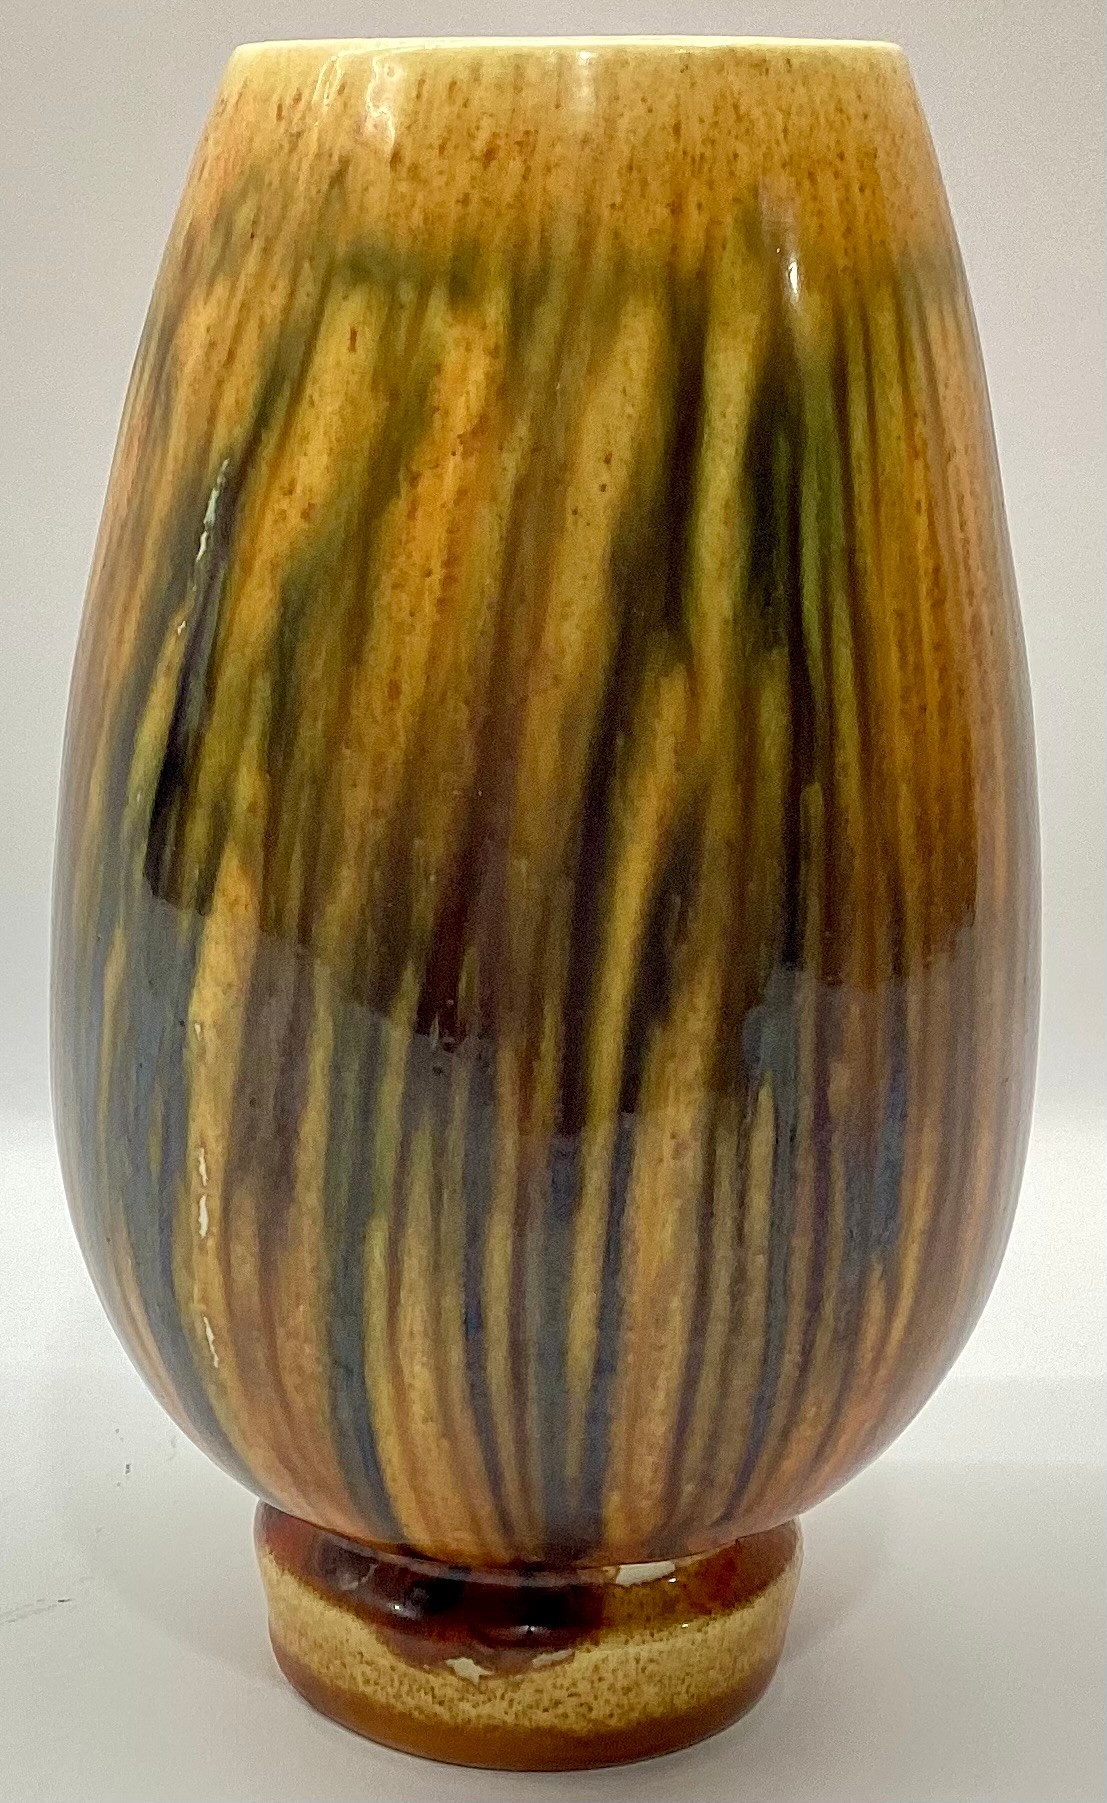 Poole Pottery rare & hard to find studio vase (pattern sheet vase no. 19) designed by Robert - Image 2 of 4